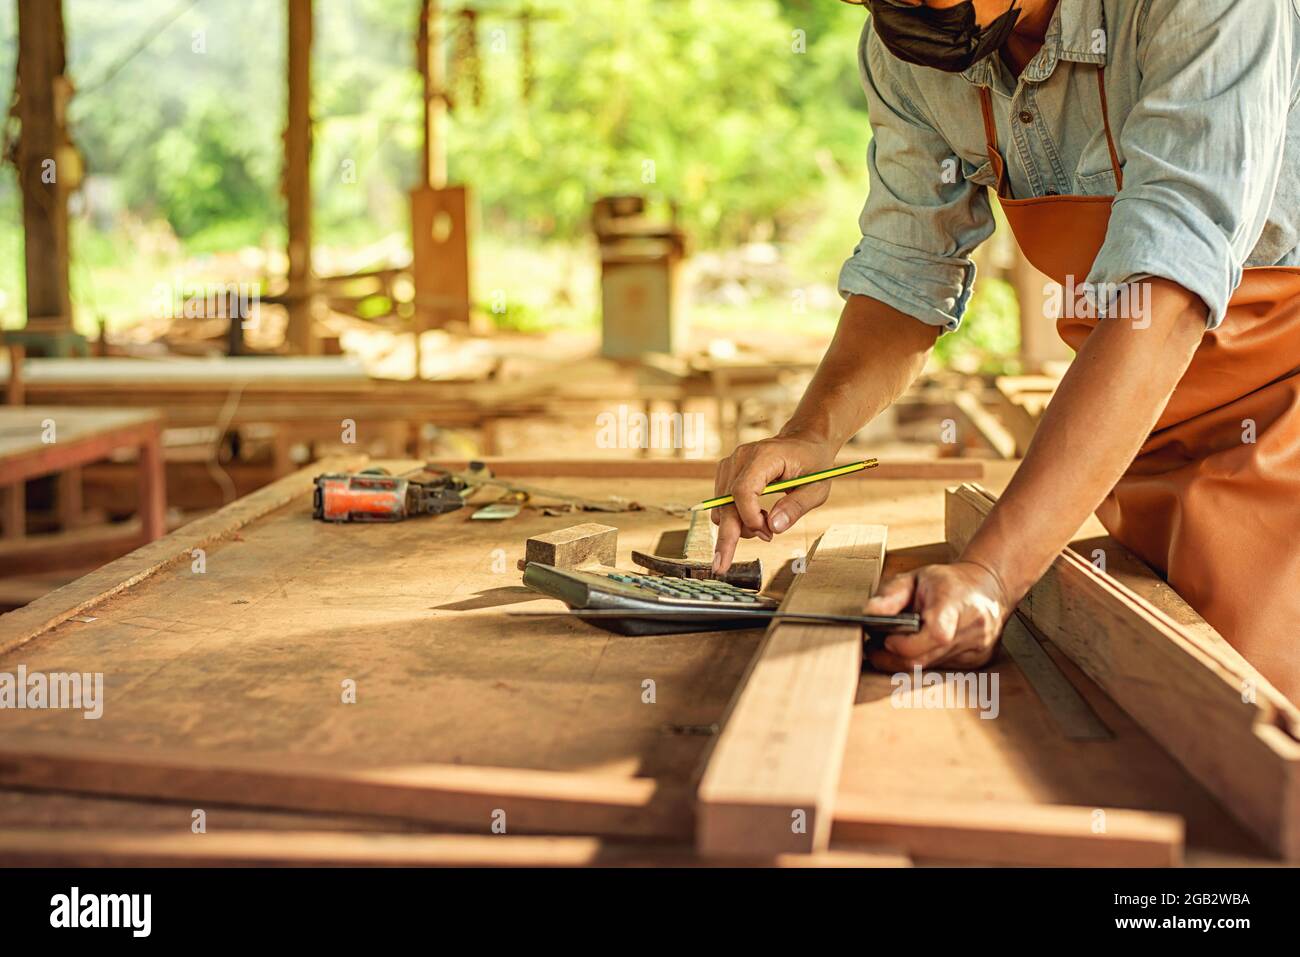 Carpenter Woodwork and furniture making in carpentry workshop